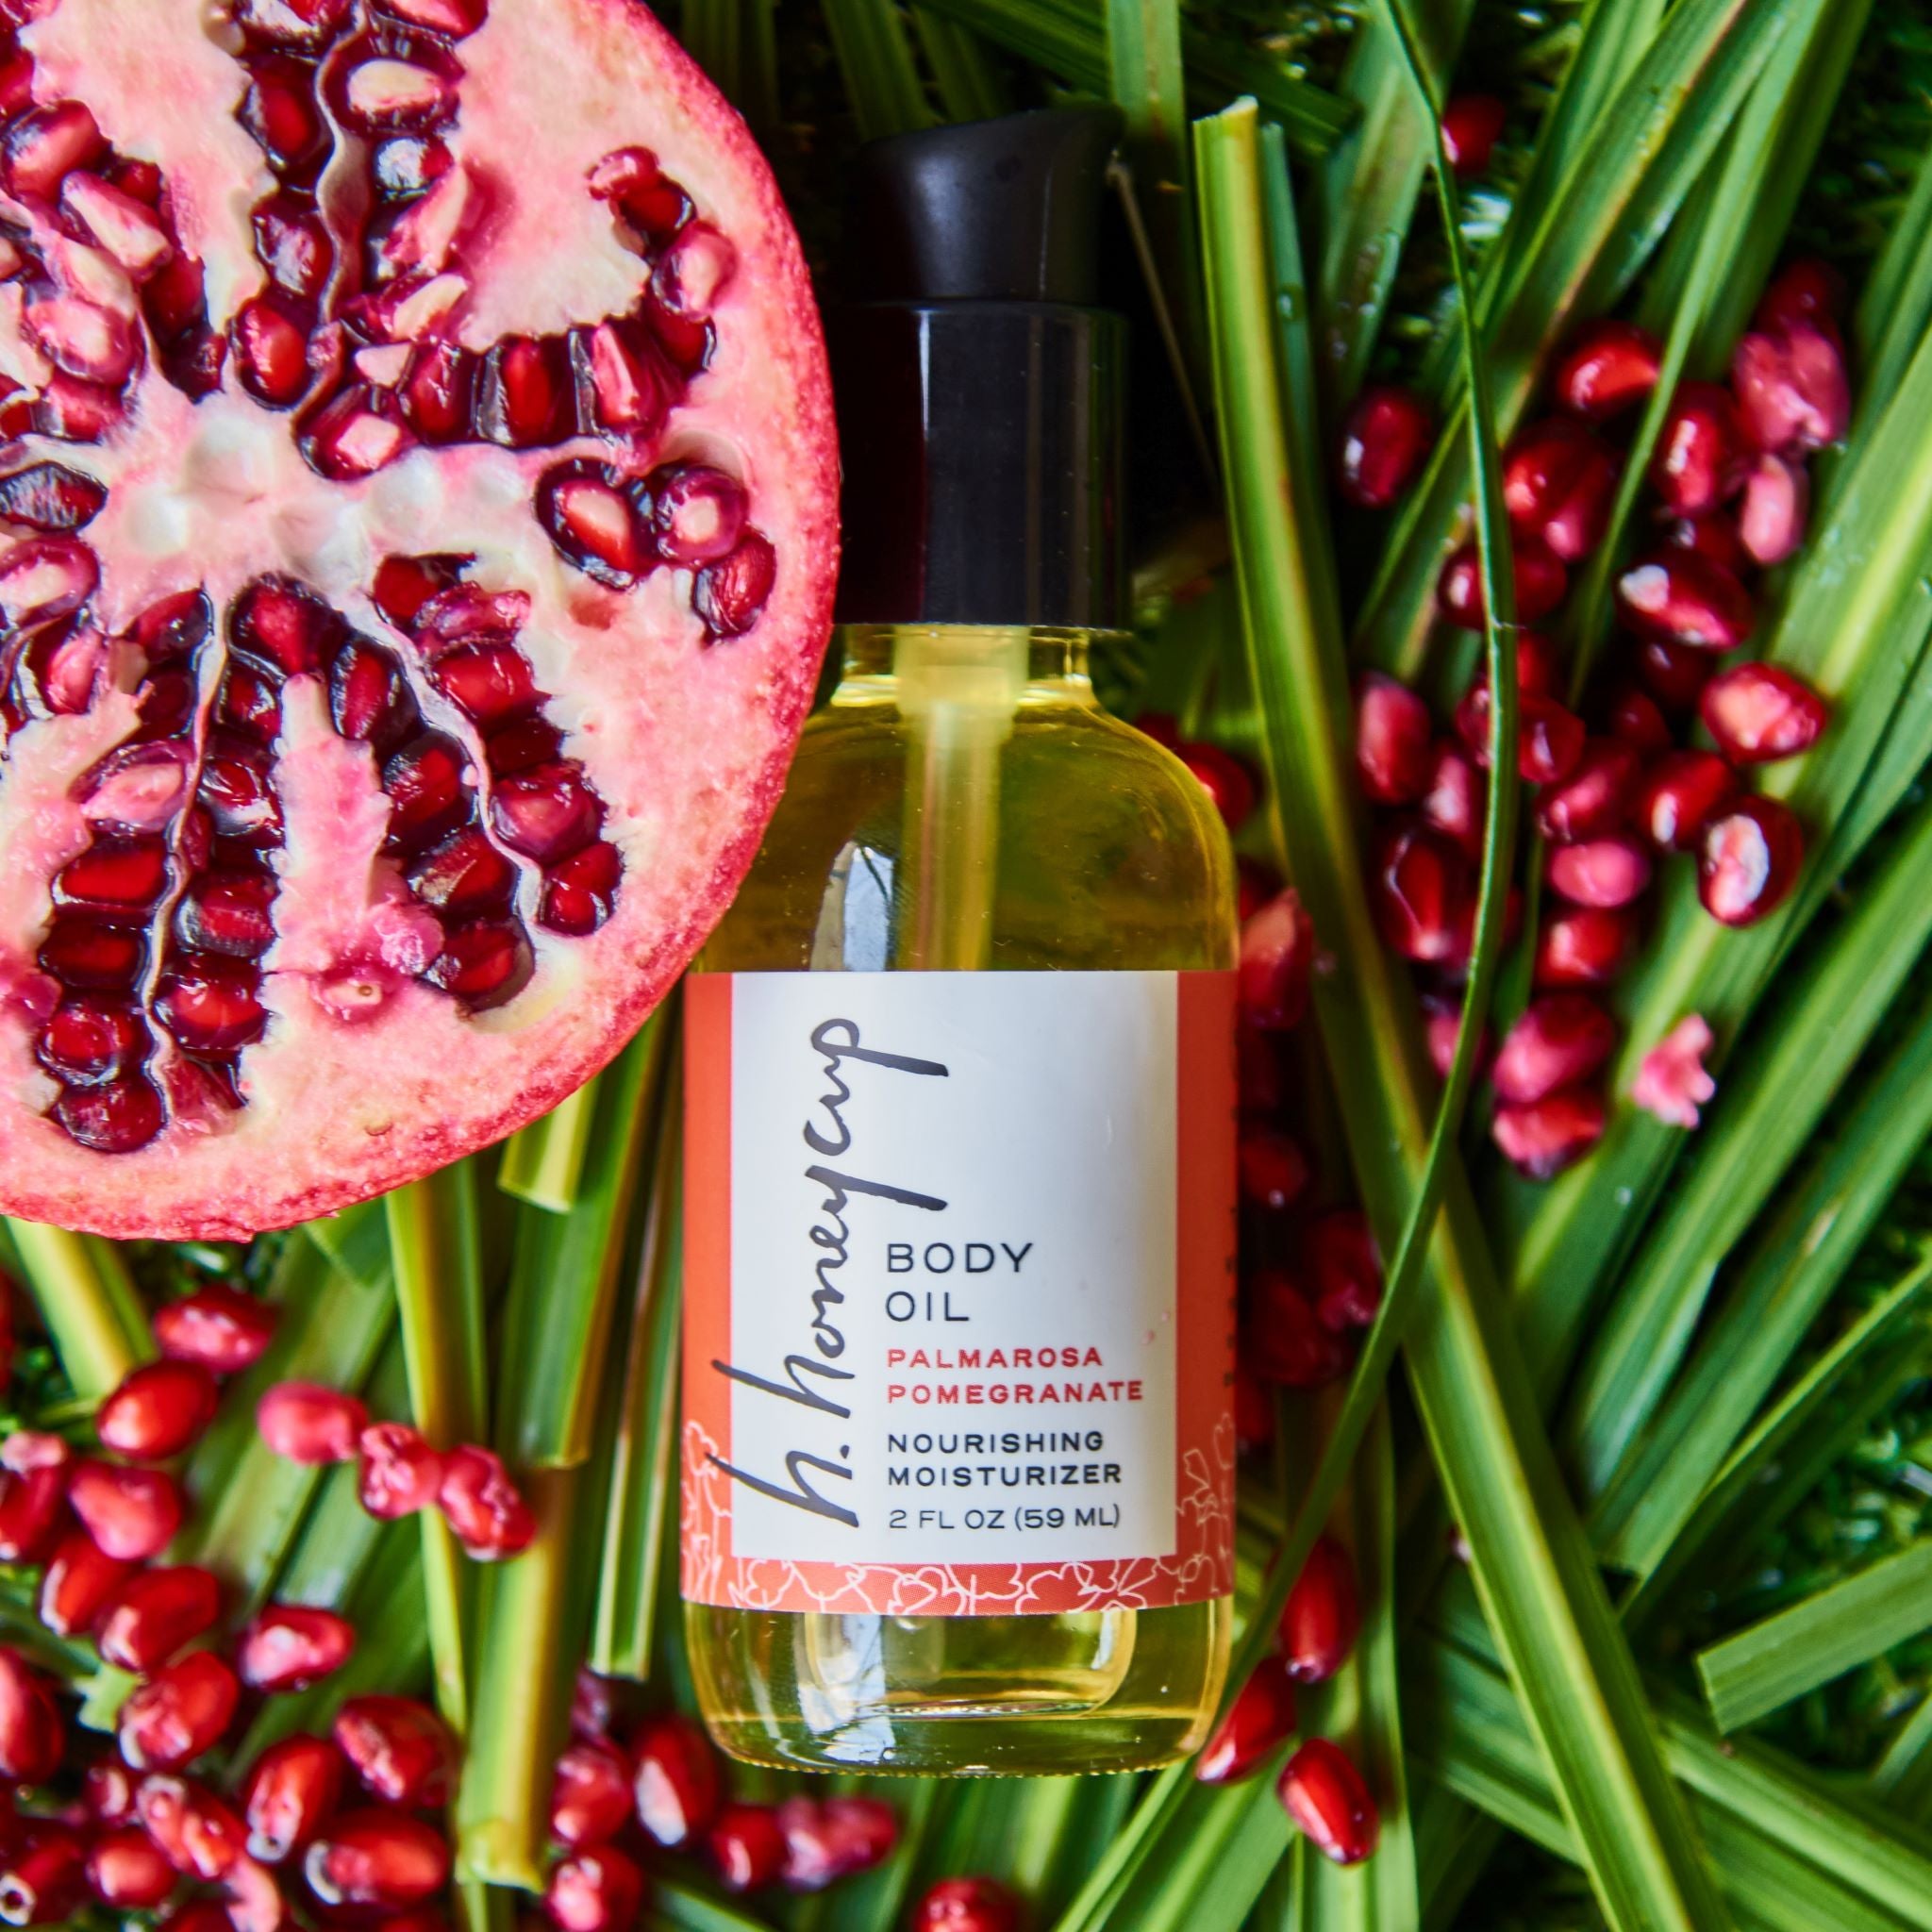 body oil with palmarosa and pomegranates